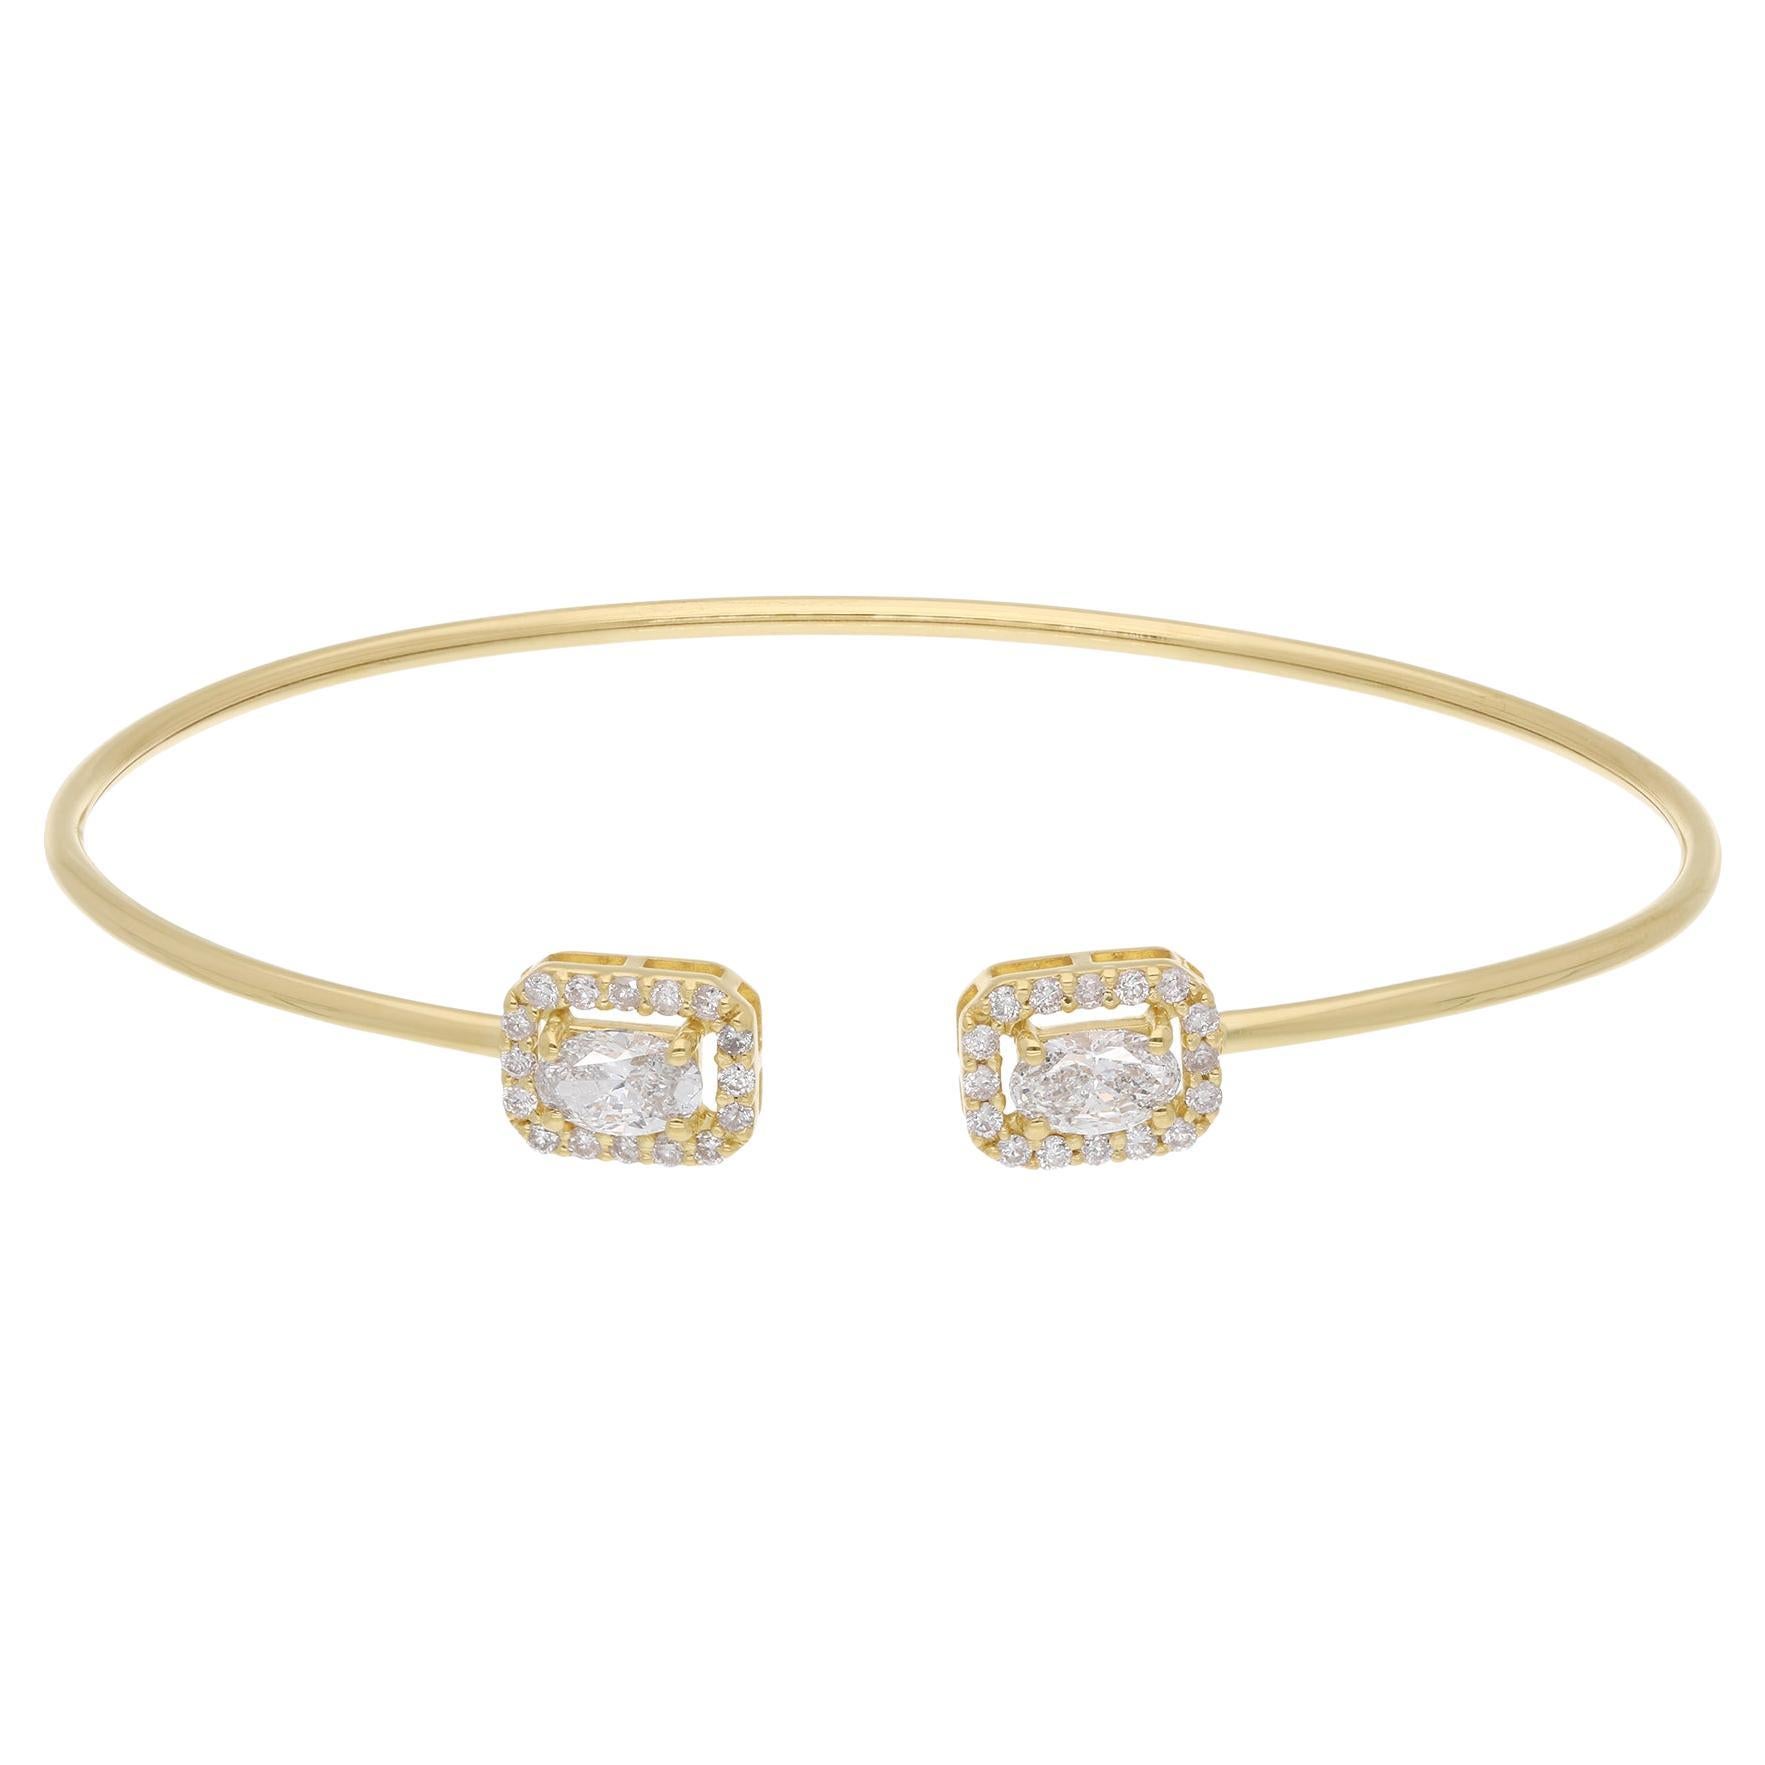 Oval & Round Diamond Cuff Bangle Bracelet 14 Karat Yellow Gold Handmade Jewelry For Sale